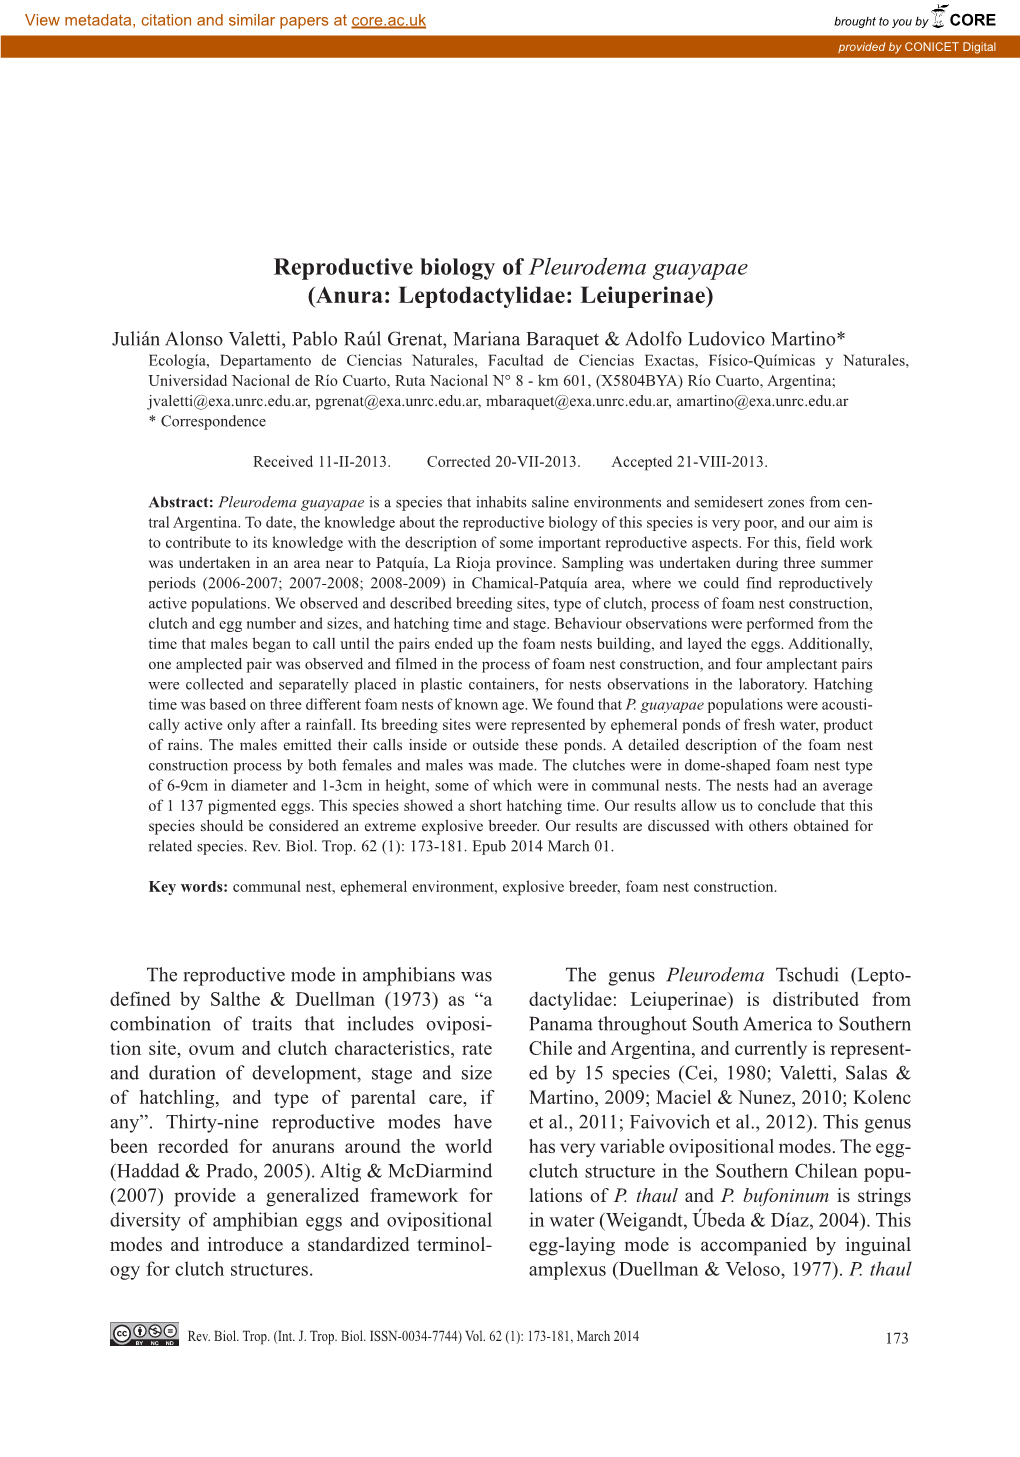 Reproductive Biology of Pleurodema Guayapae (Anura: Leptodactylidae: Leiuperinae)